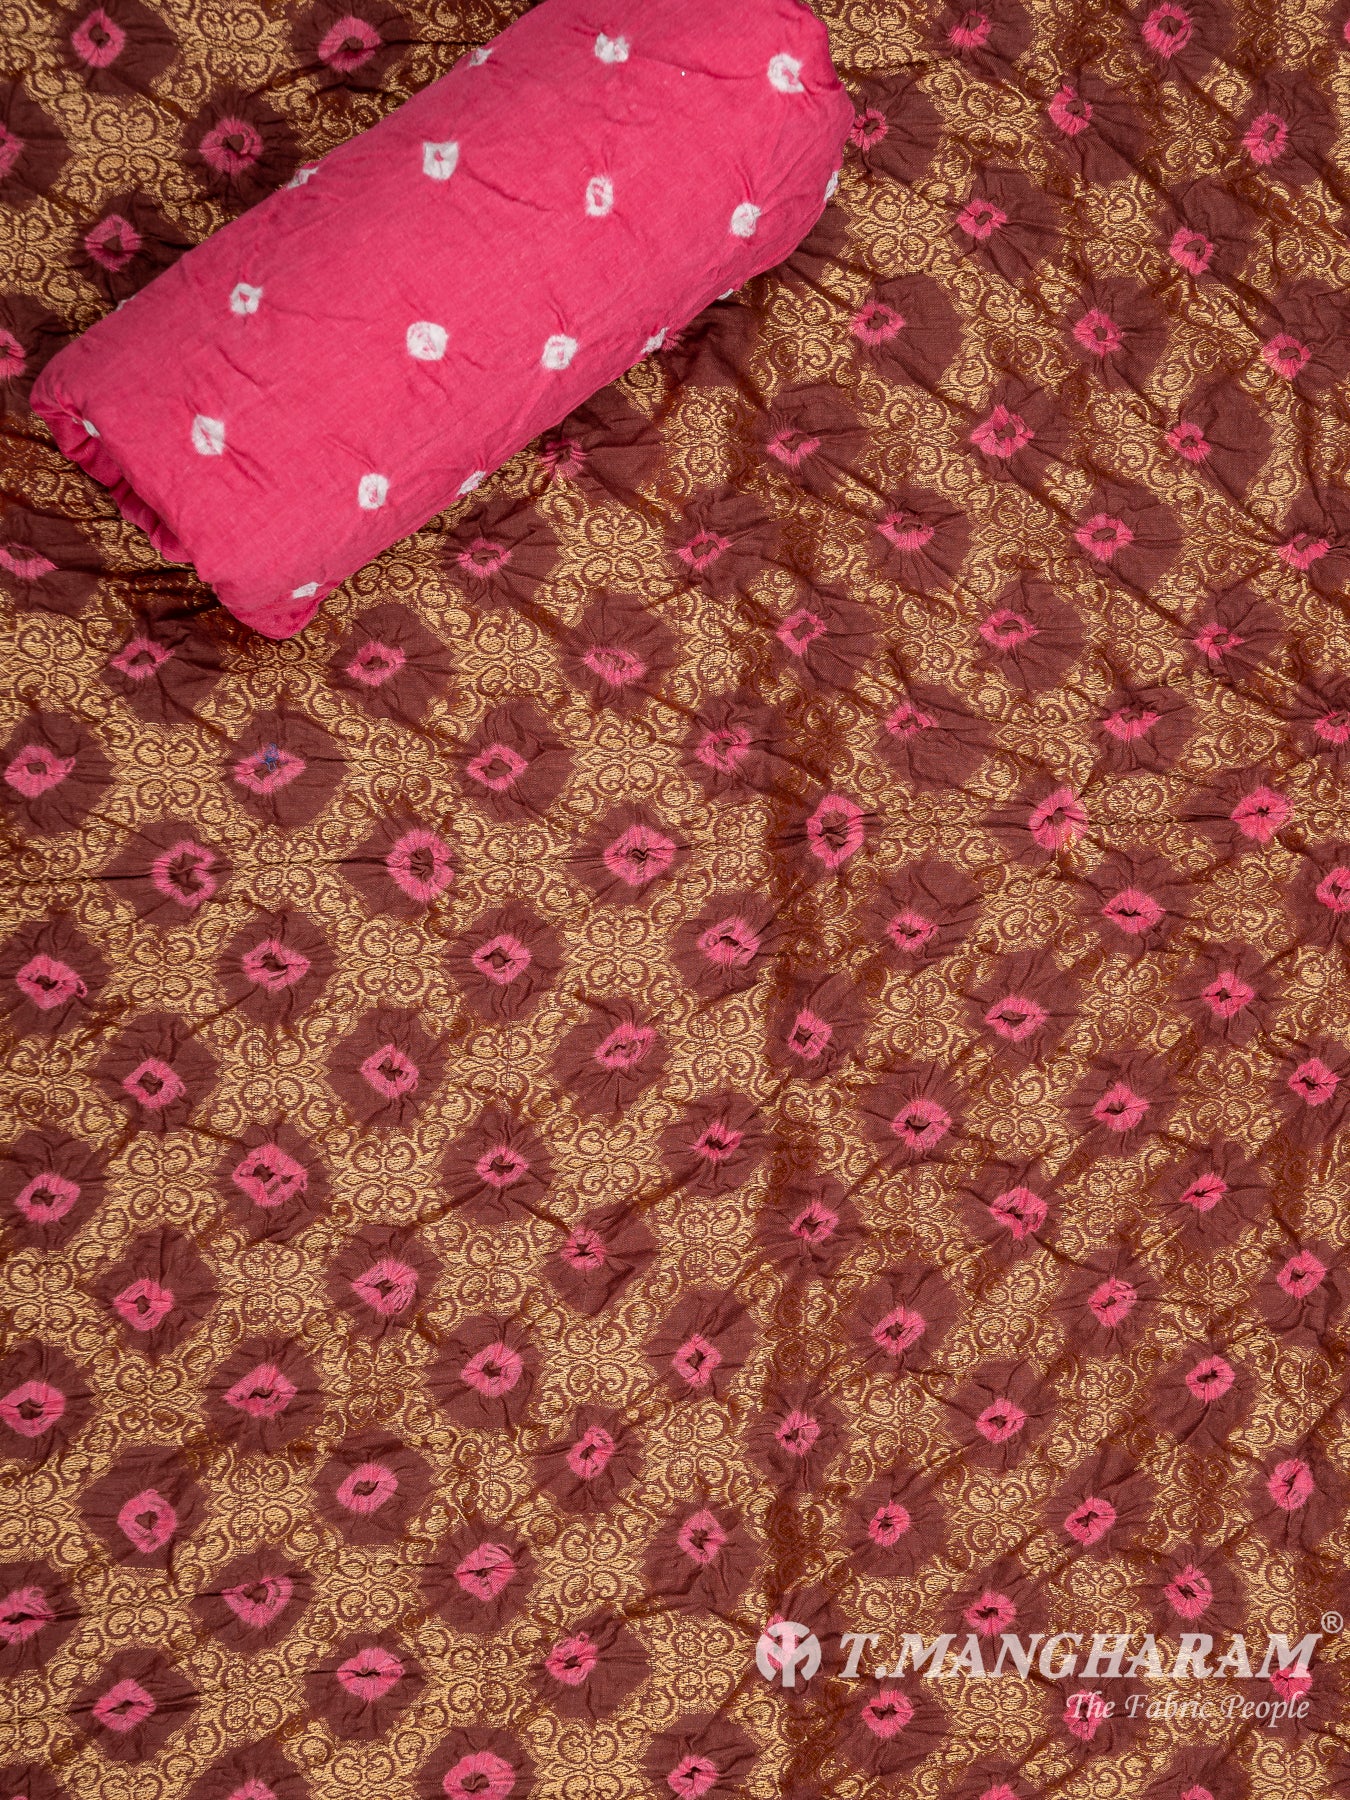 Mutlicolor Cotton Chudidhar Fabric Set - EG1790 view-2